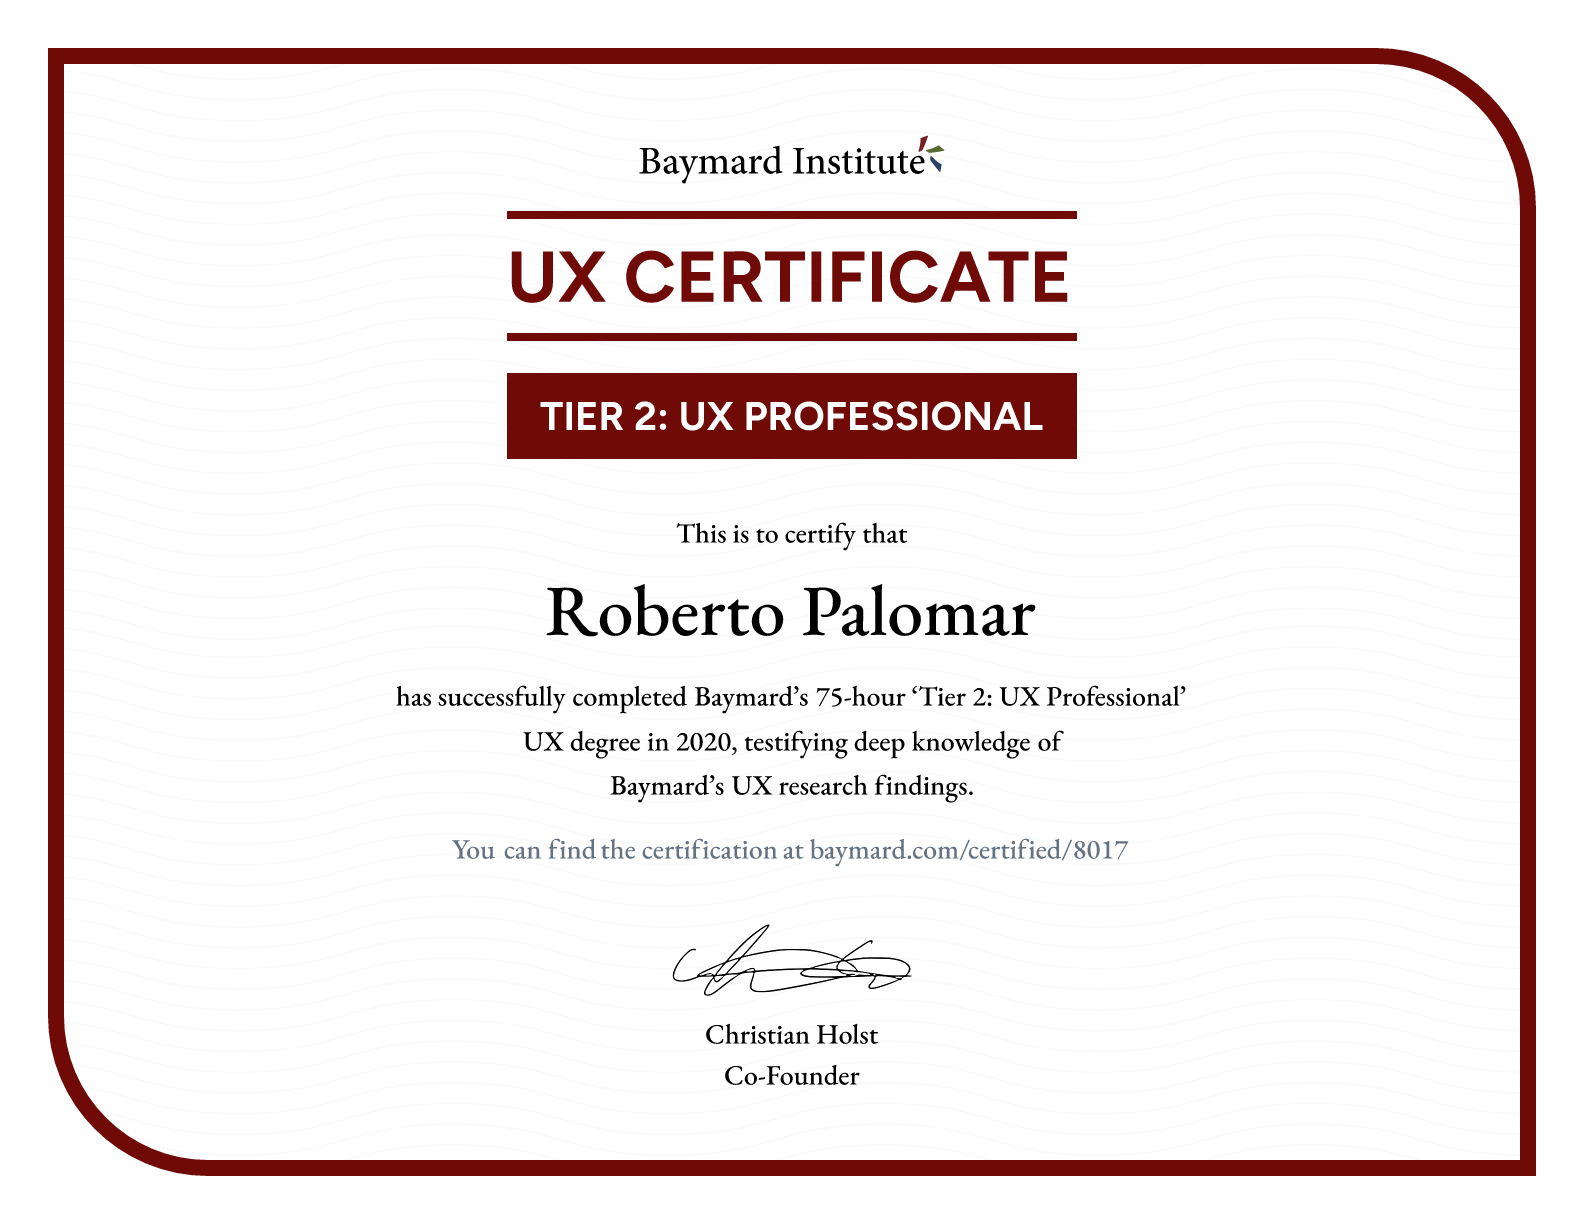 Roberto Palomar’s certificate